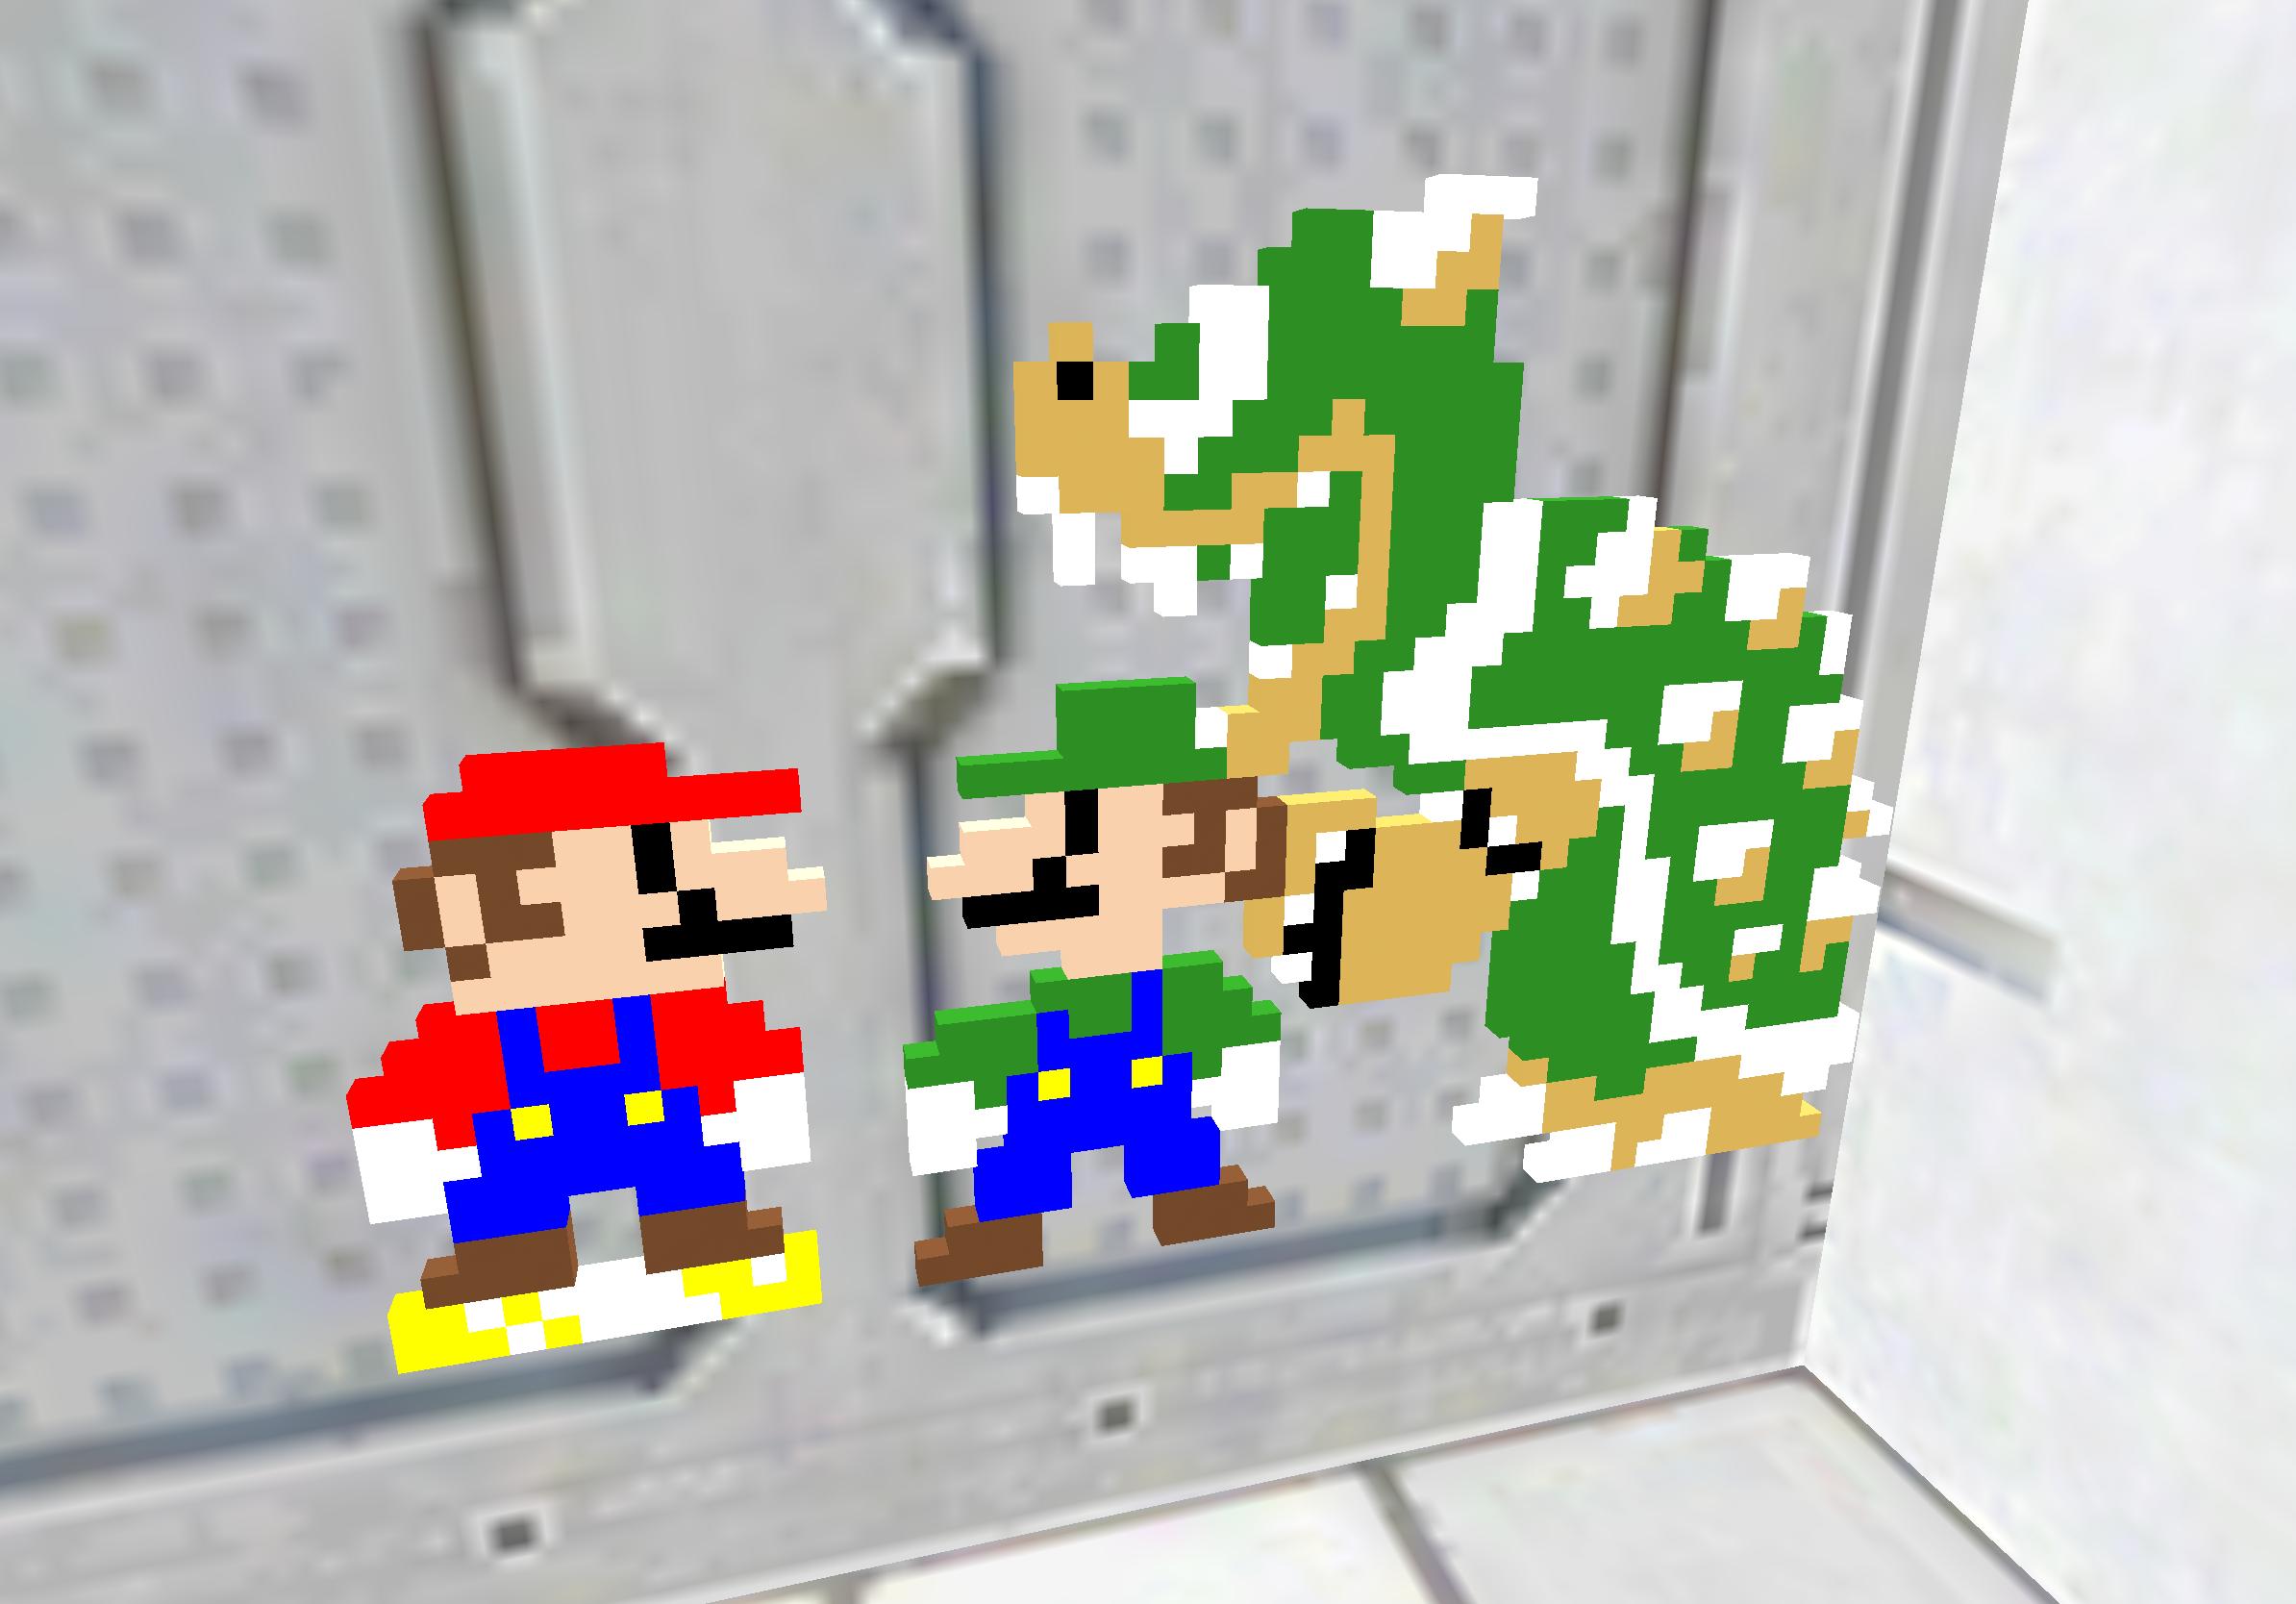 Mario and Luigi vs Bowser